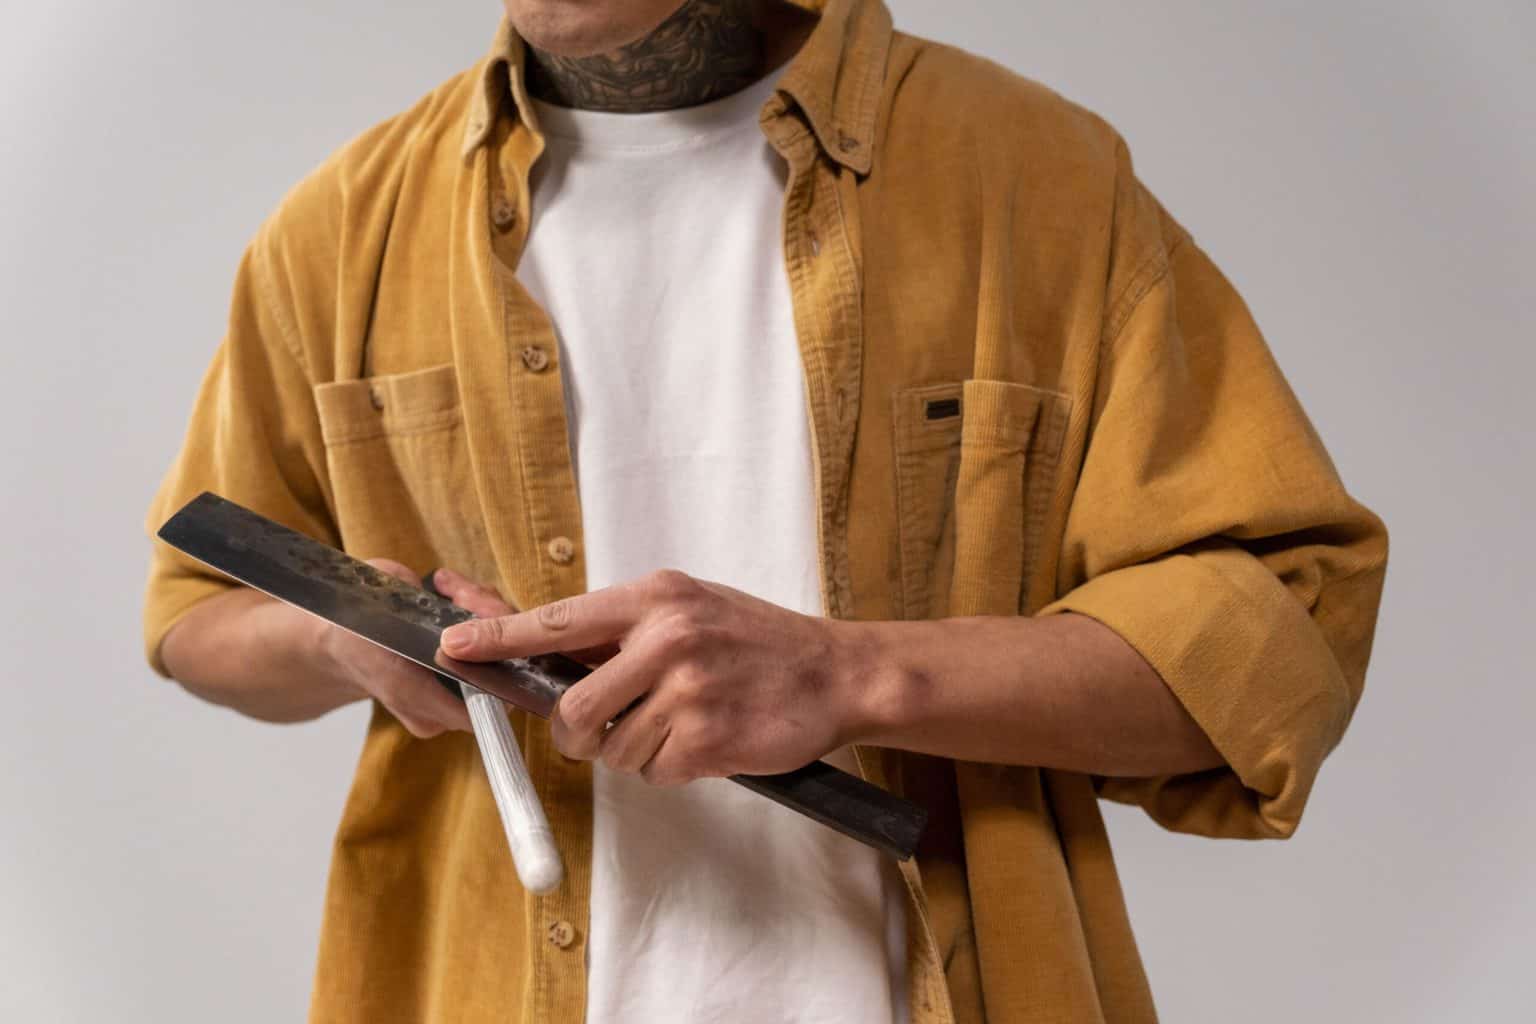 Sharpening a chopping knife